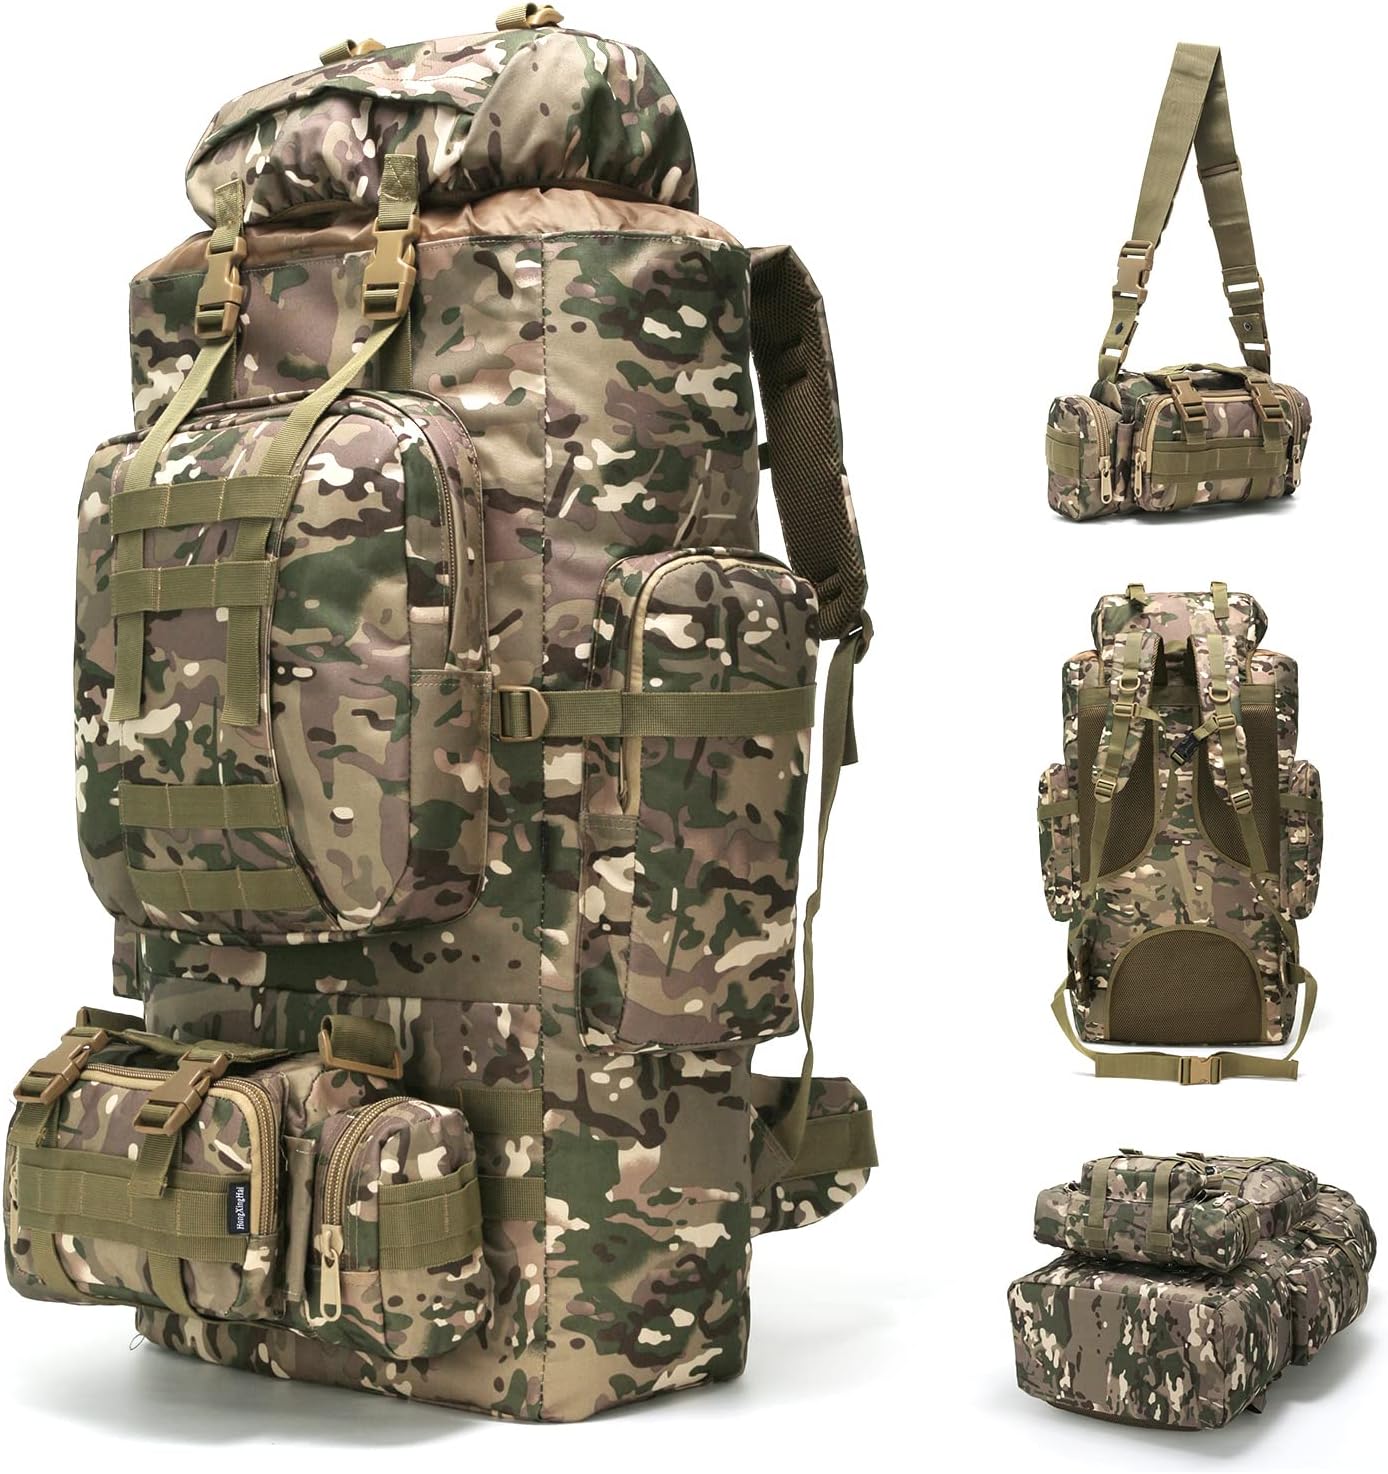 HongXingHai 100L Camping Hiking Backpack,Molle military Tactical rucksack backpack,Waterproof Lightweight Hiking Backpack (CP Camo)